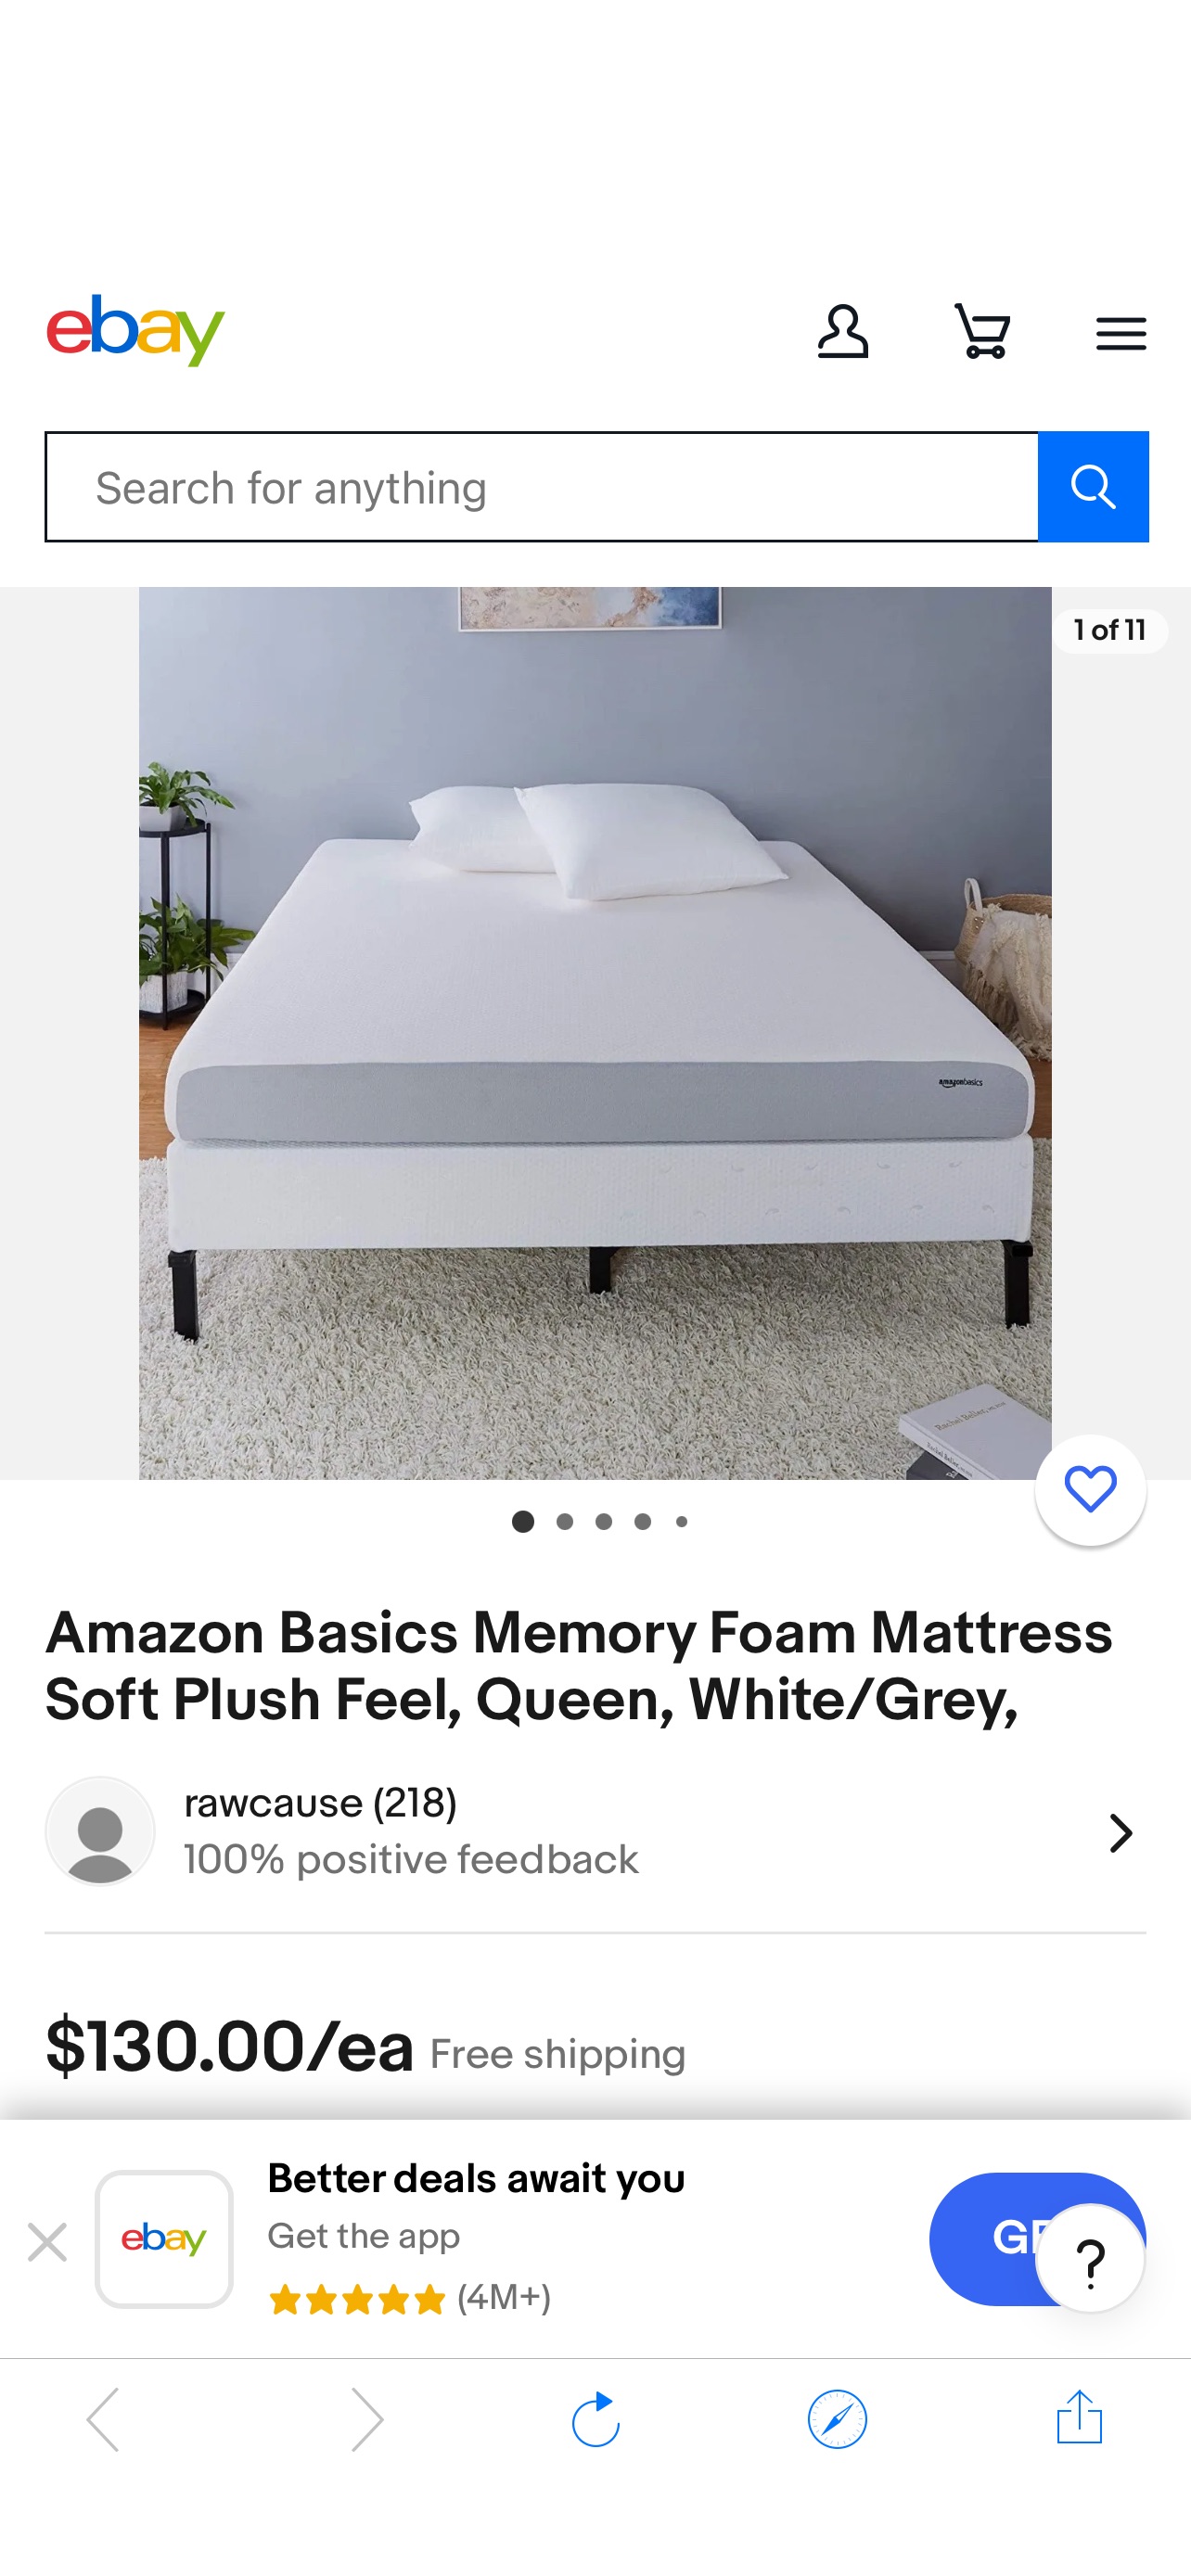 Amazon Basics Memory Foam Mattress Soft Plush Feel, Queen, White/Grey, | eBay